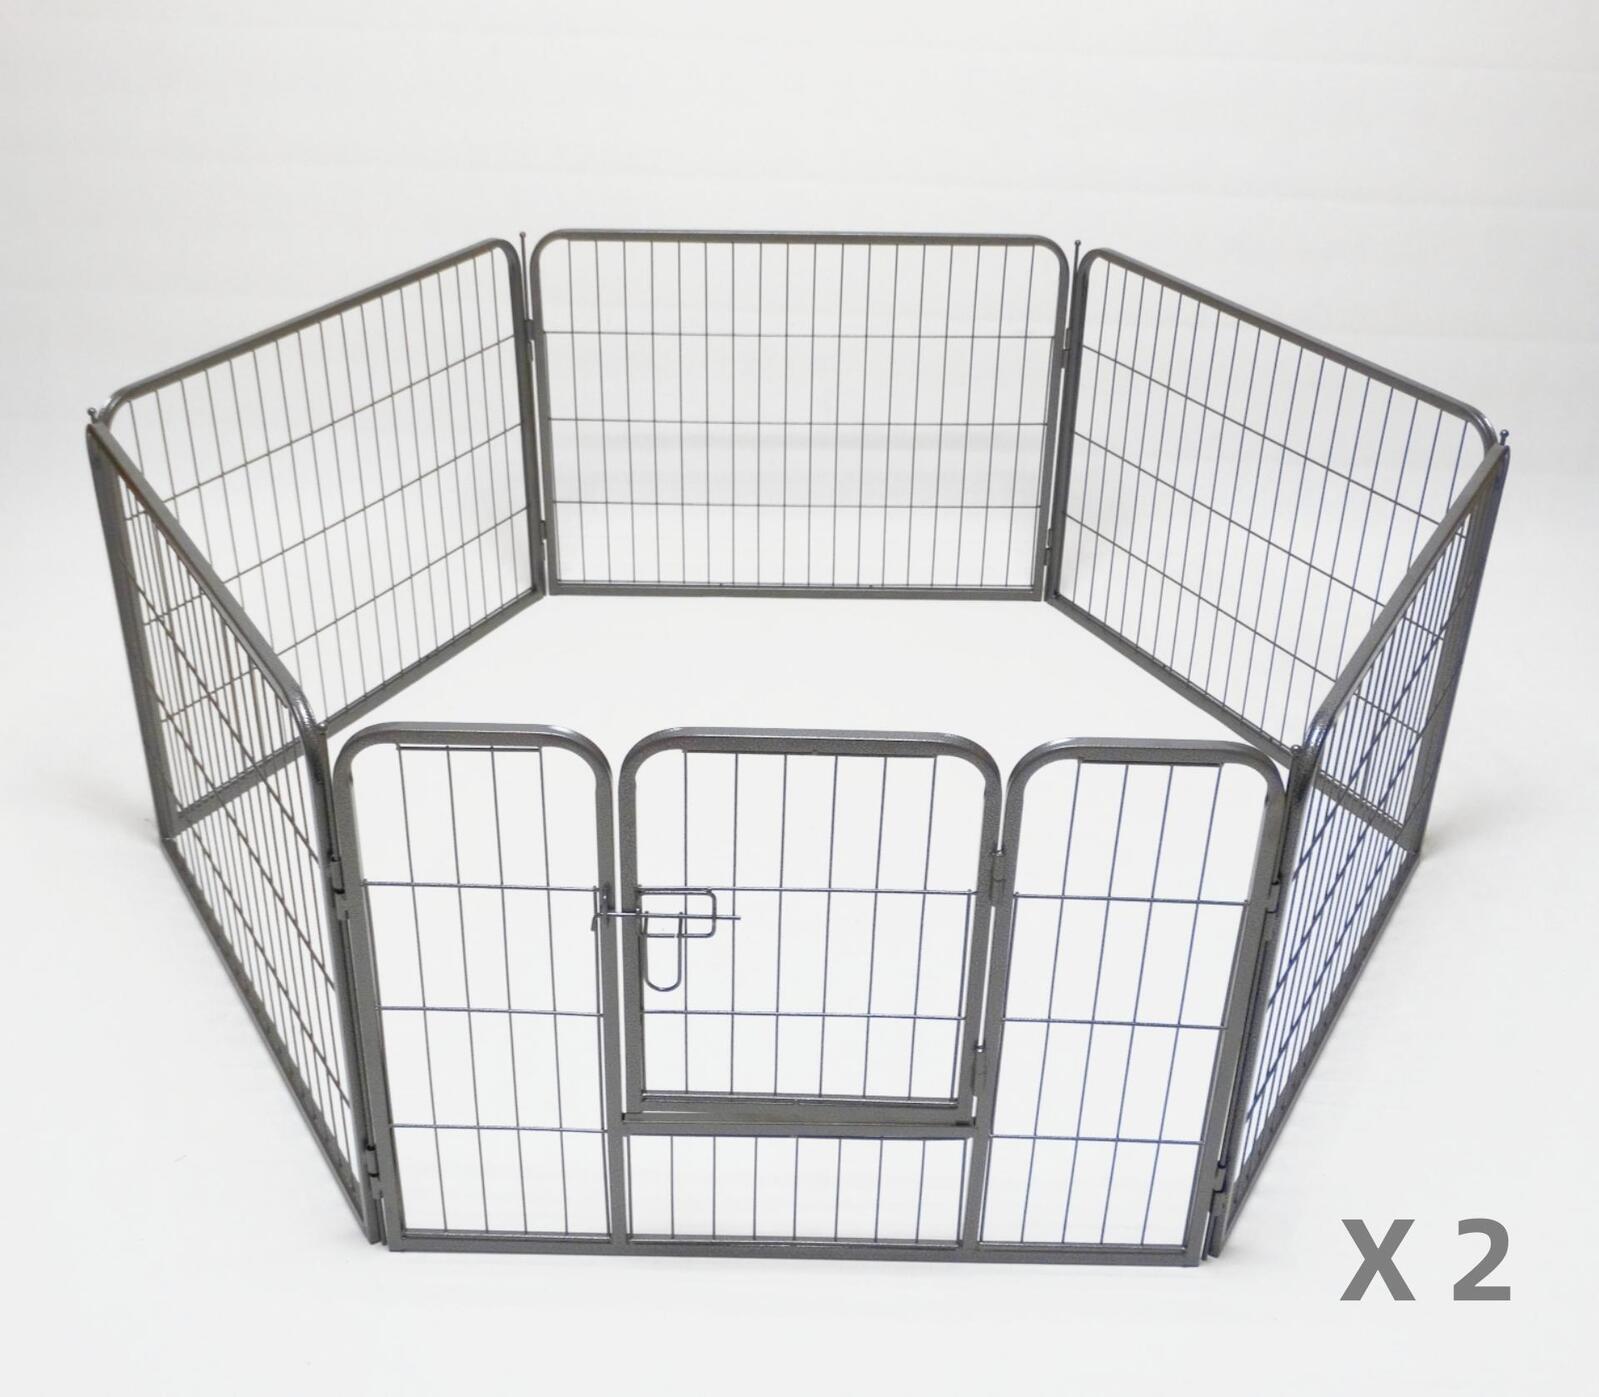 2 x 6 Panel Heavy Duty Pet Dog Puppy Cat Rabbit Exercise Playpen Fence (60 cm)